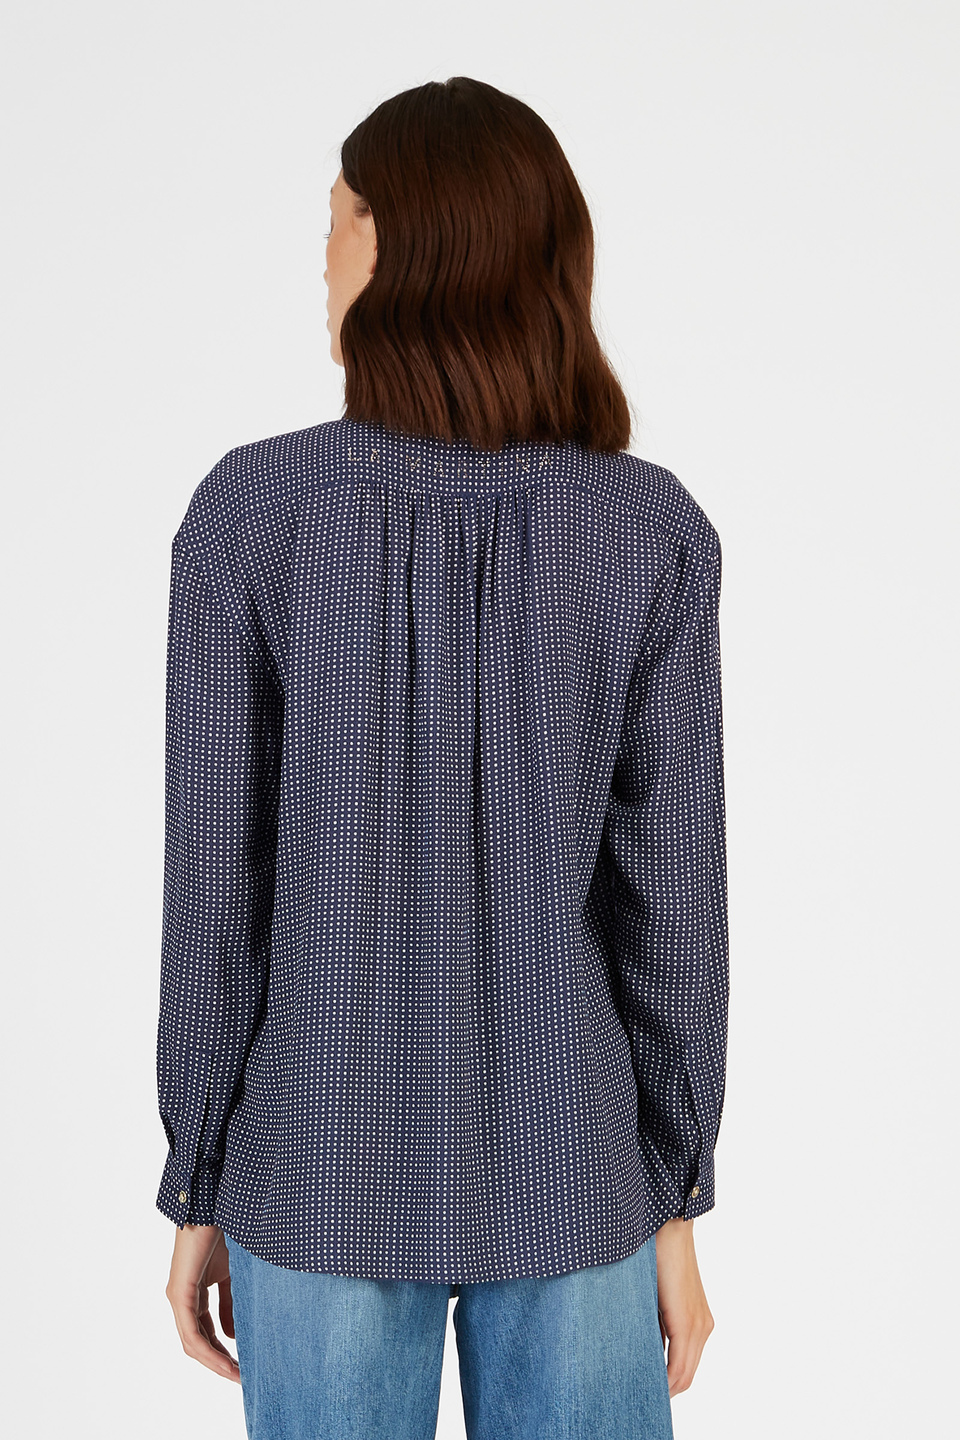 Timeless polka dot solid color viscose shirt | La Martina - Official Online Shop